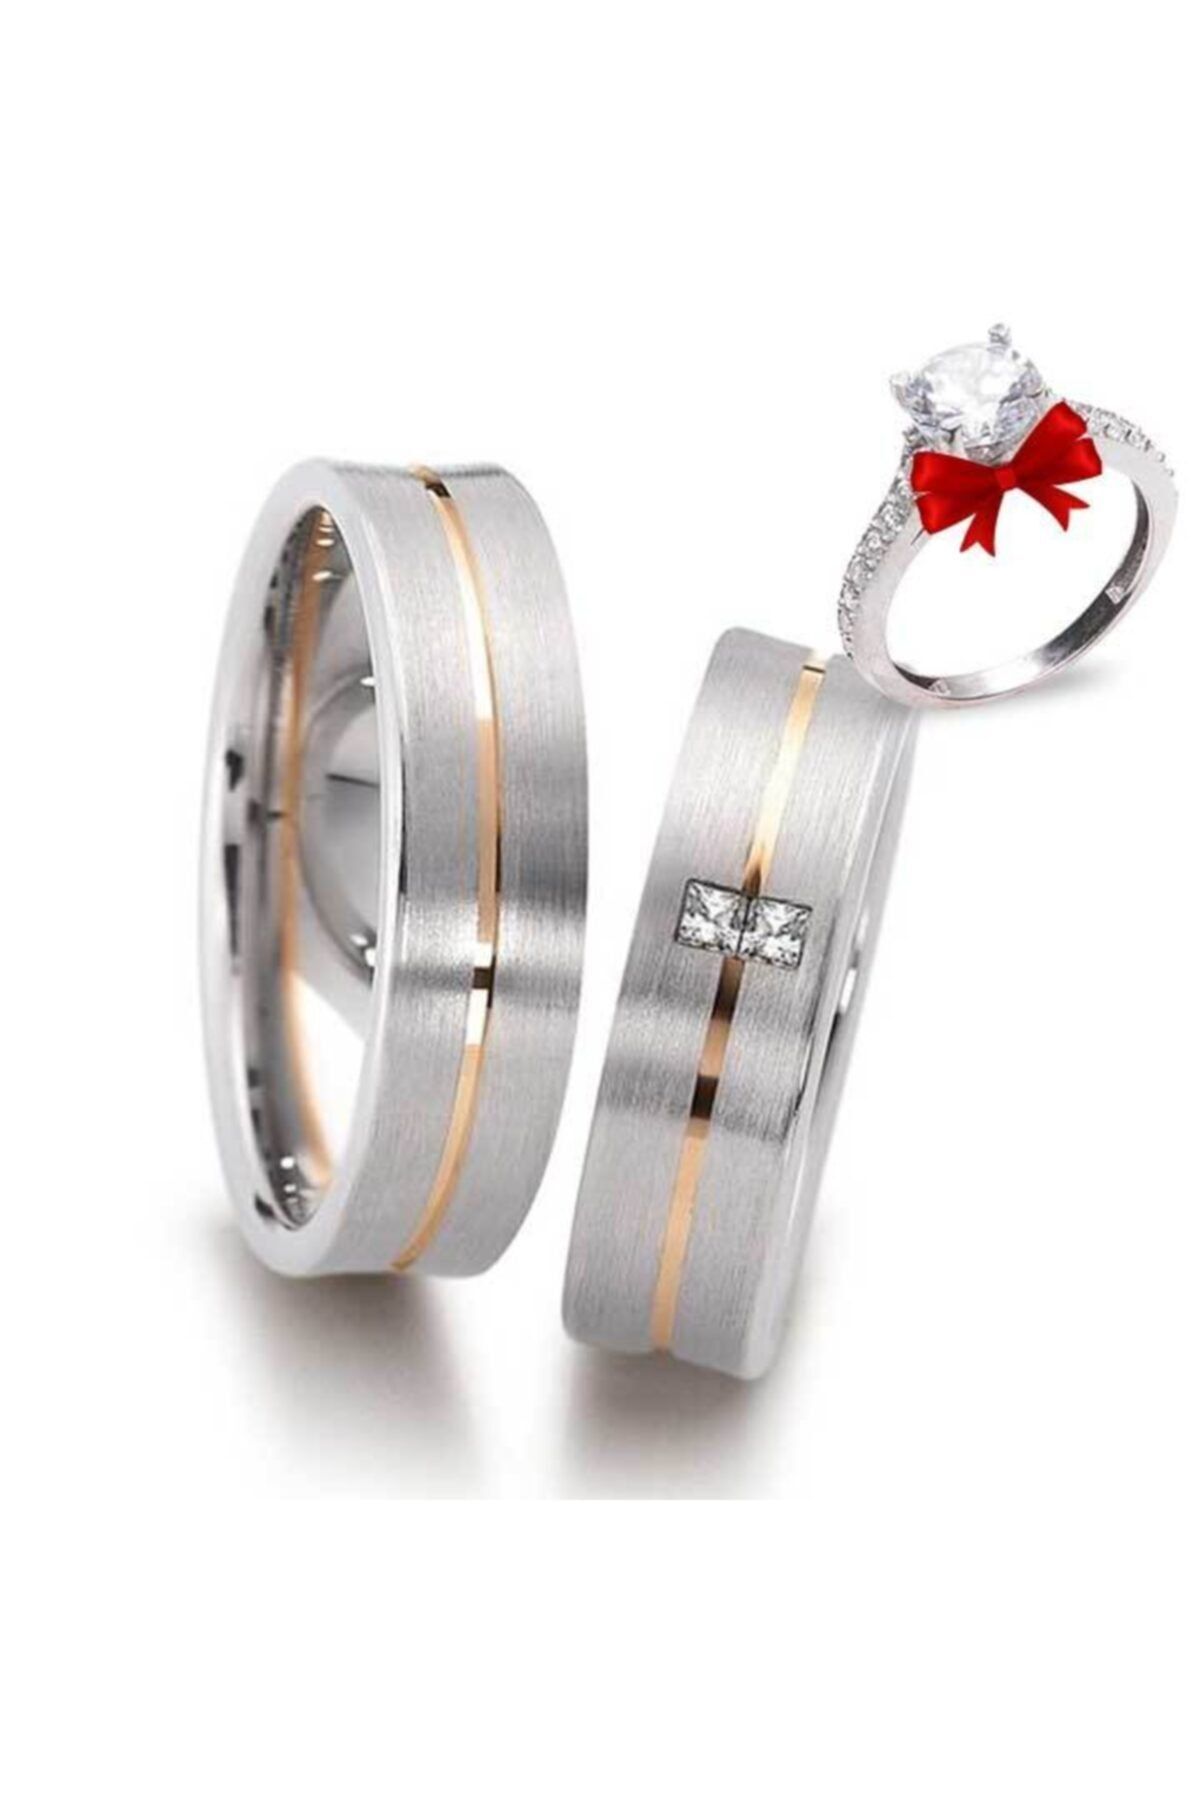 Gümüşcüm Kadın Dikdörtgen Taş Gümüş Alyans Modeli Nişan Yüzüğü